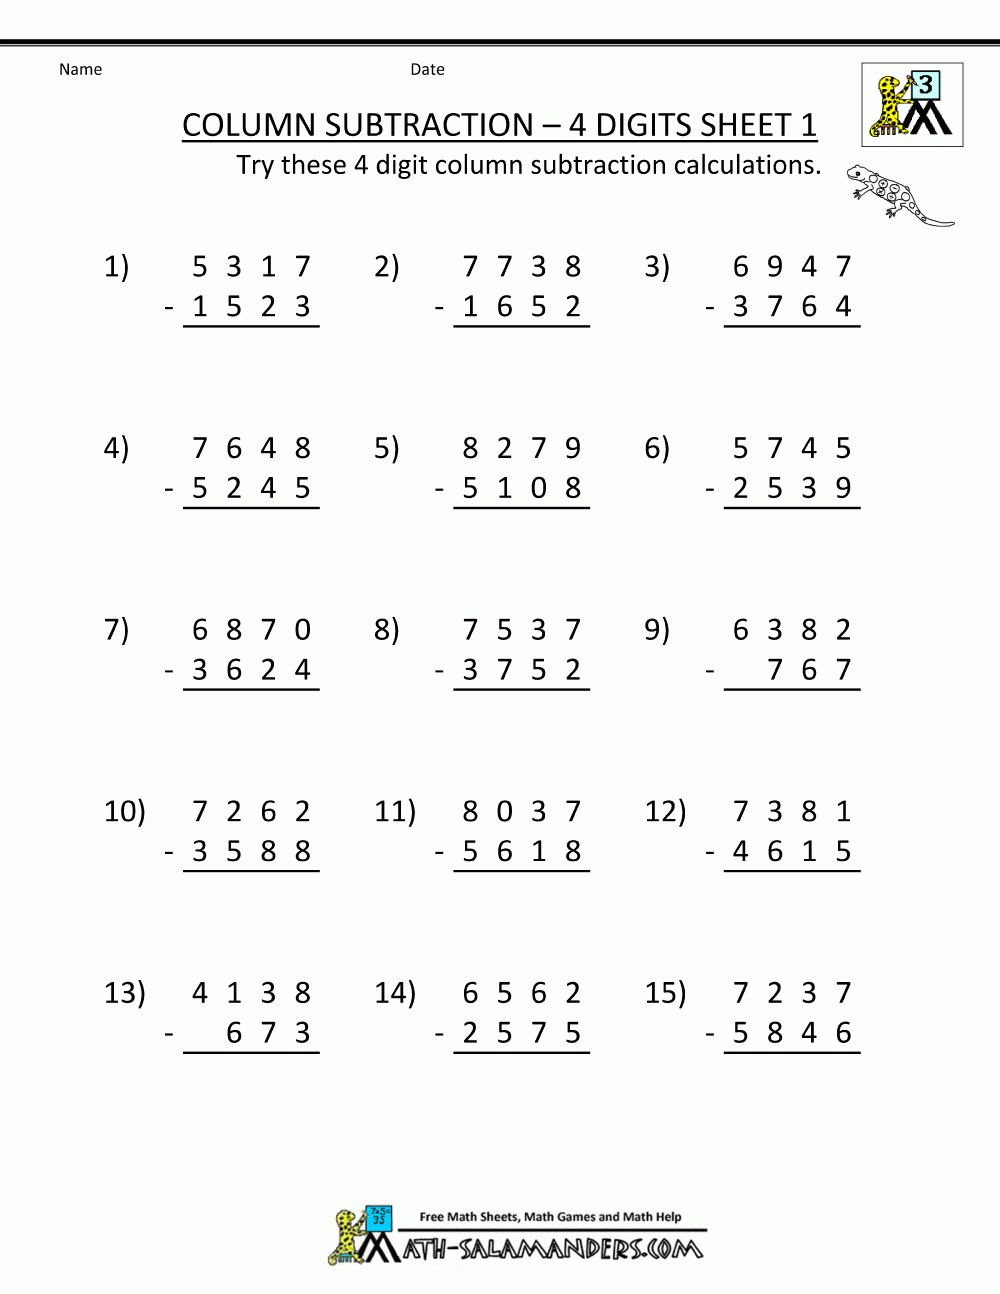 4 Digit Subtraction Worksheets | Printable Subtraction Worksheets